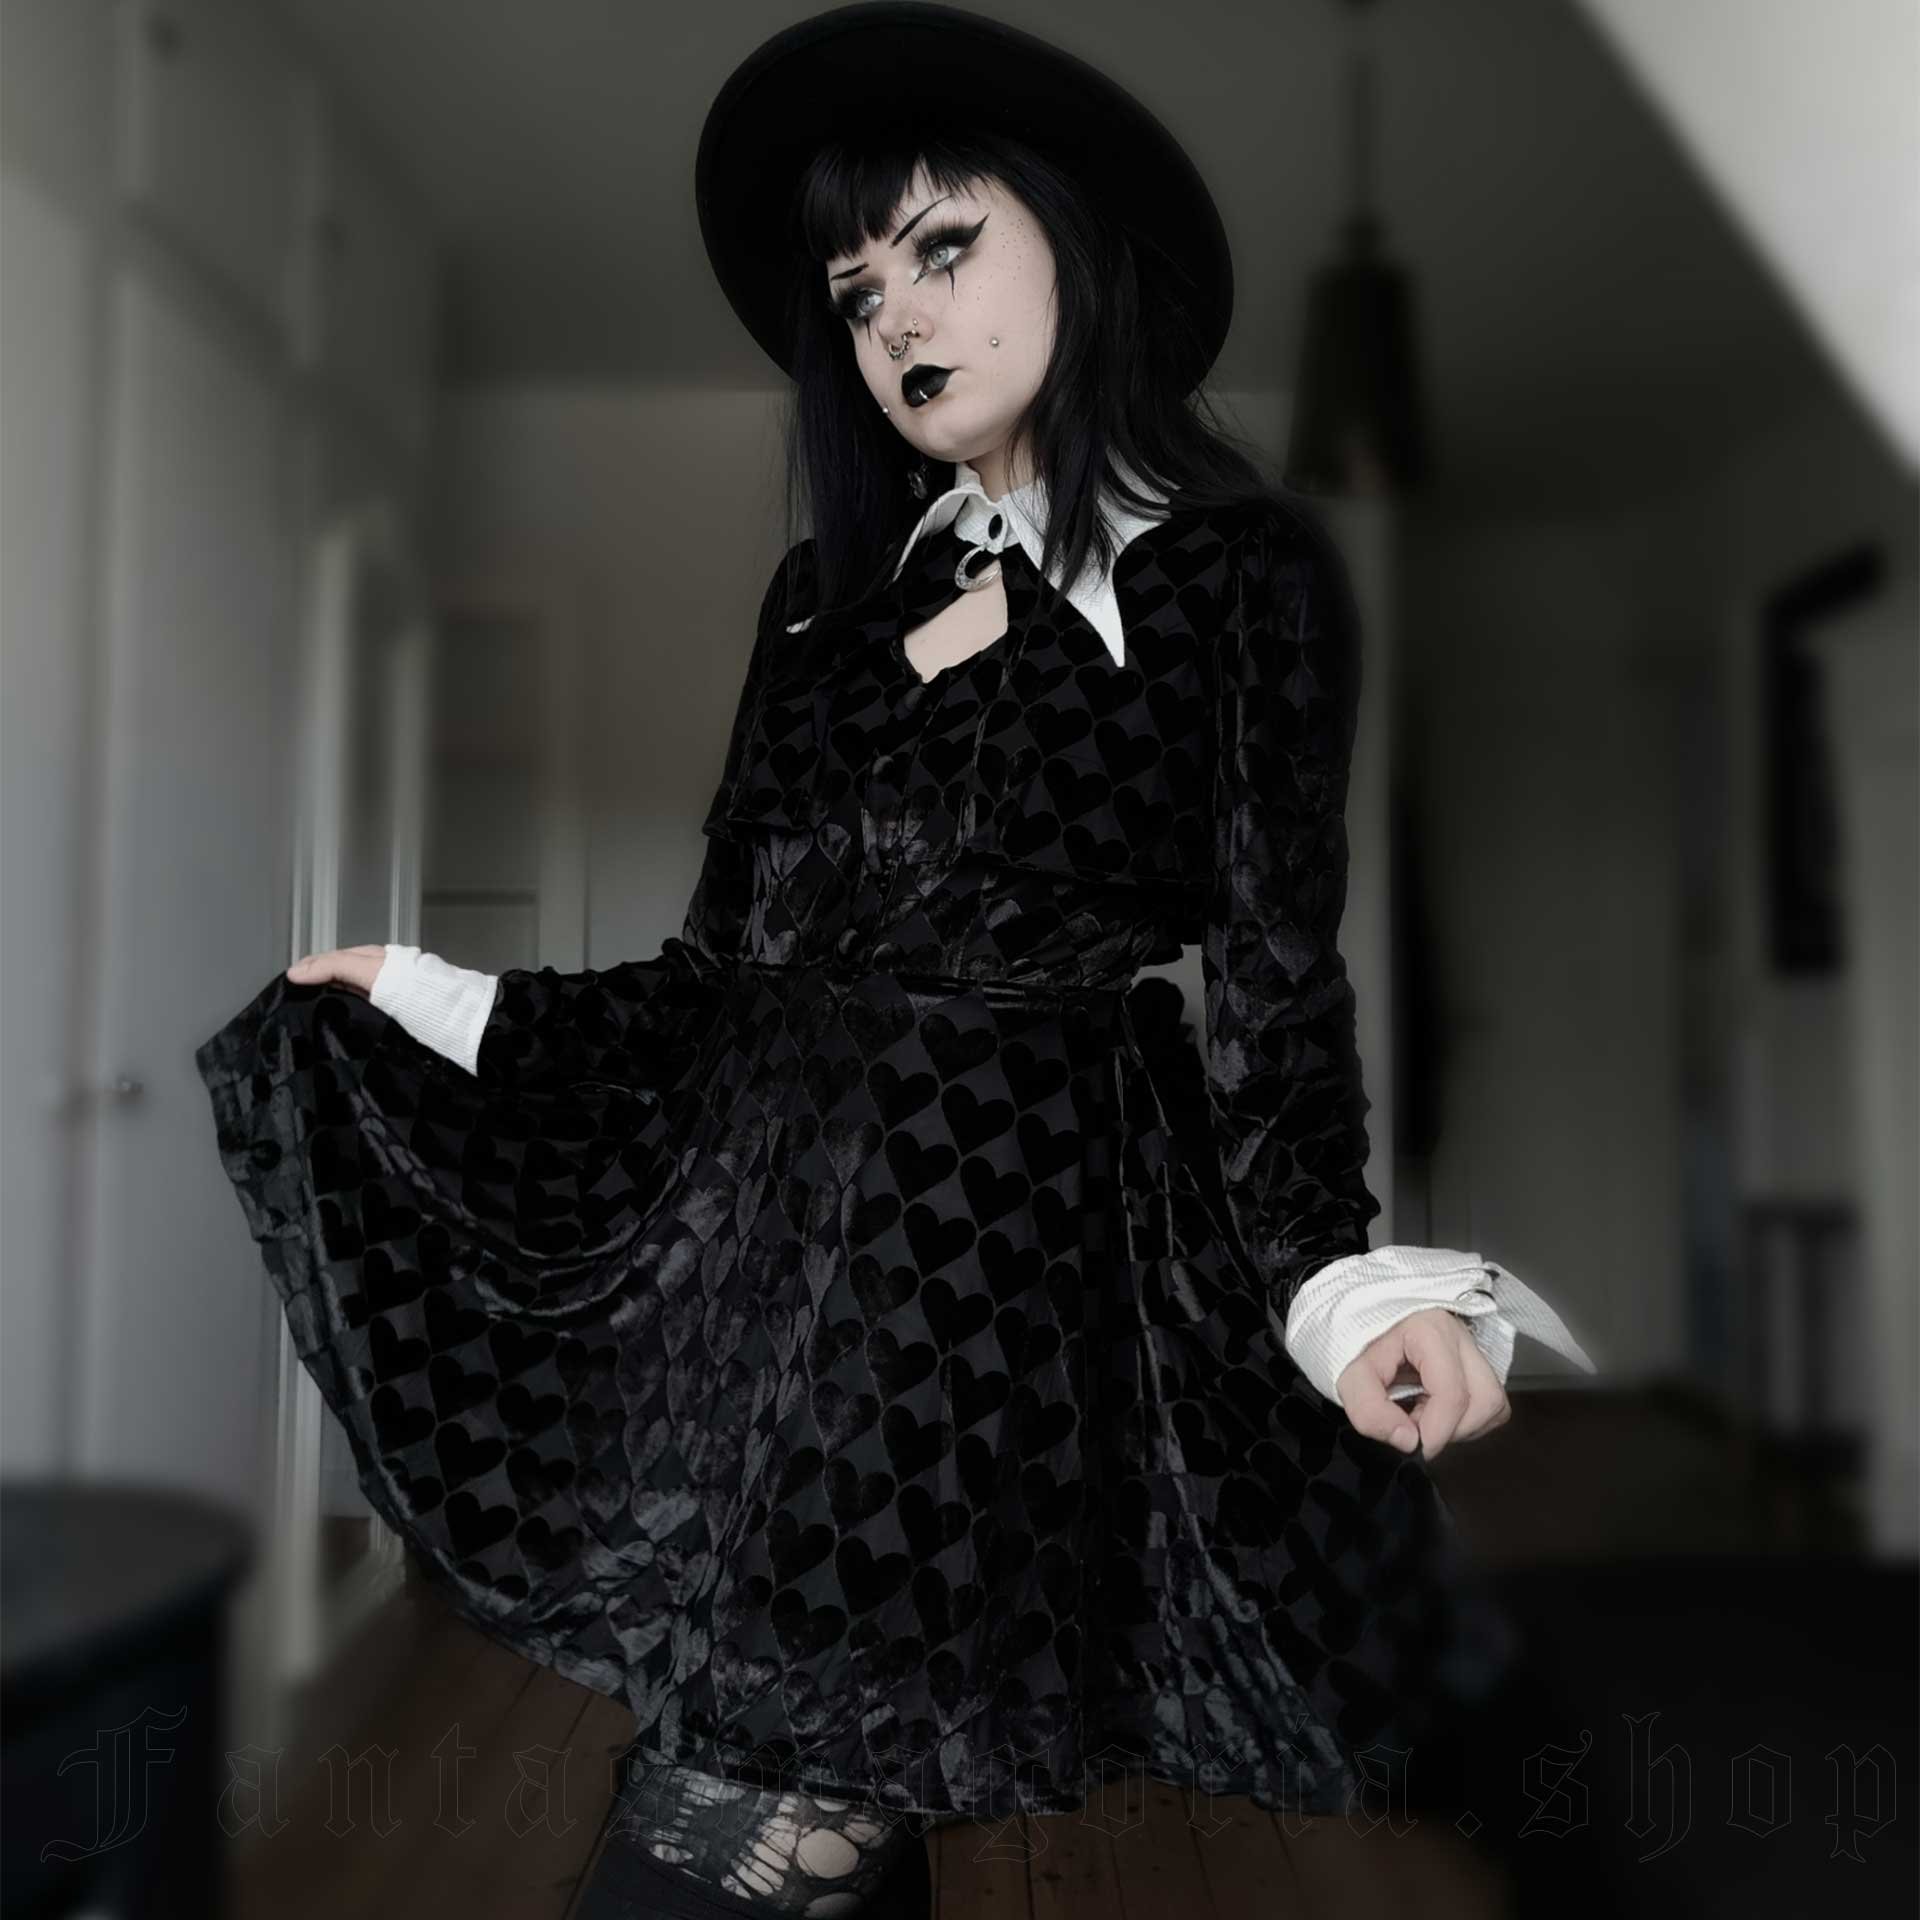 Wednesday Addams Girl Dress Wednesday Costume Wednesday -  Denmark